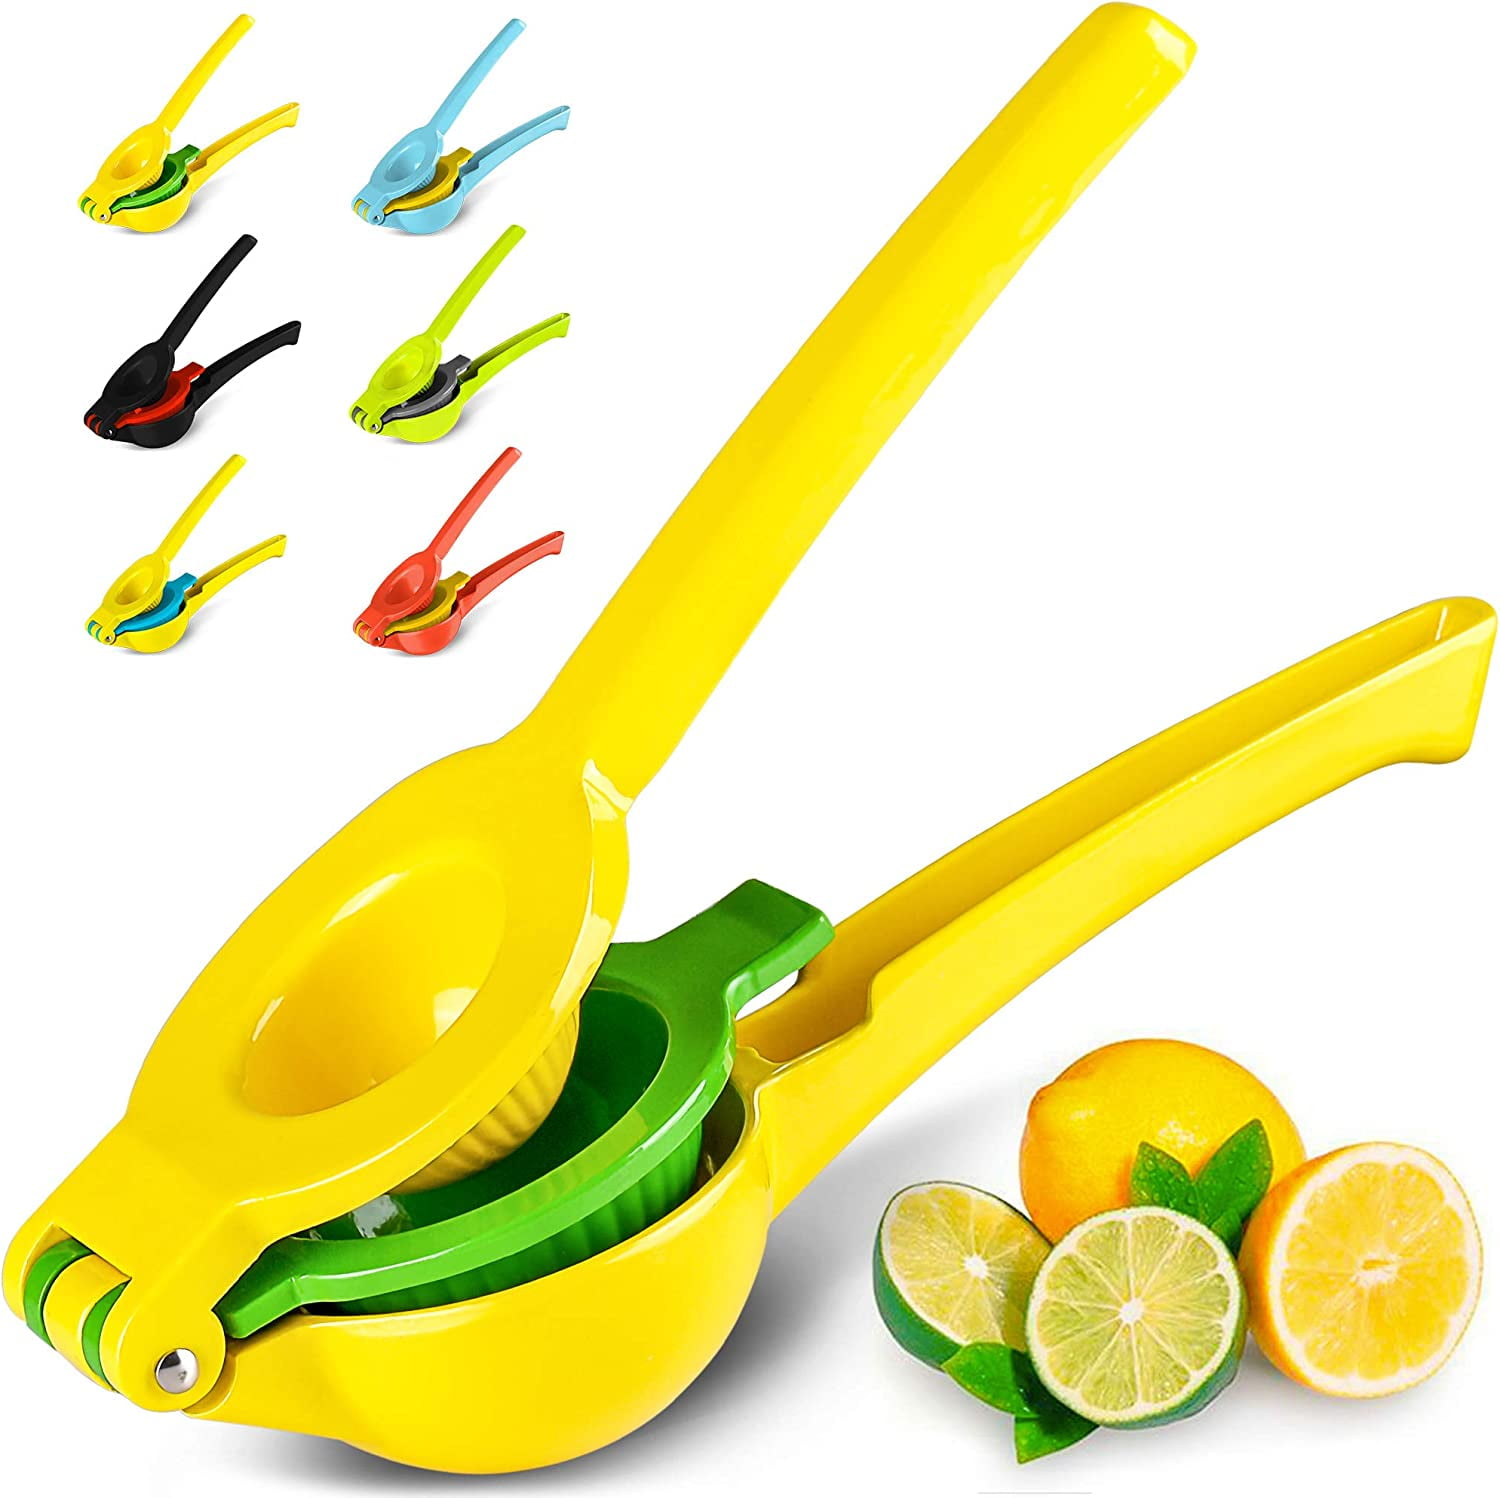 Kettle Corn Machine Company - Lemon slicer and Lemonade Press